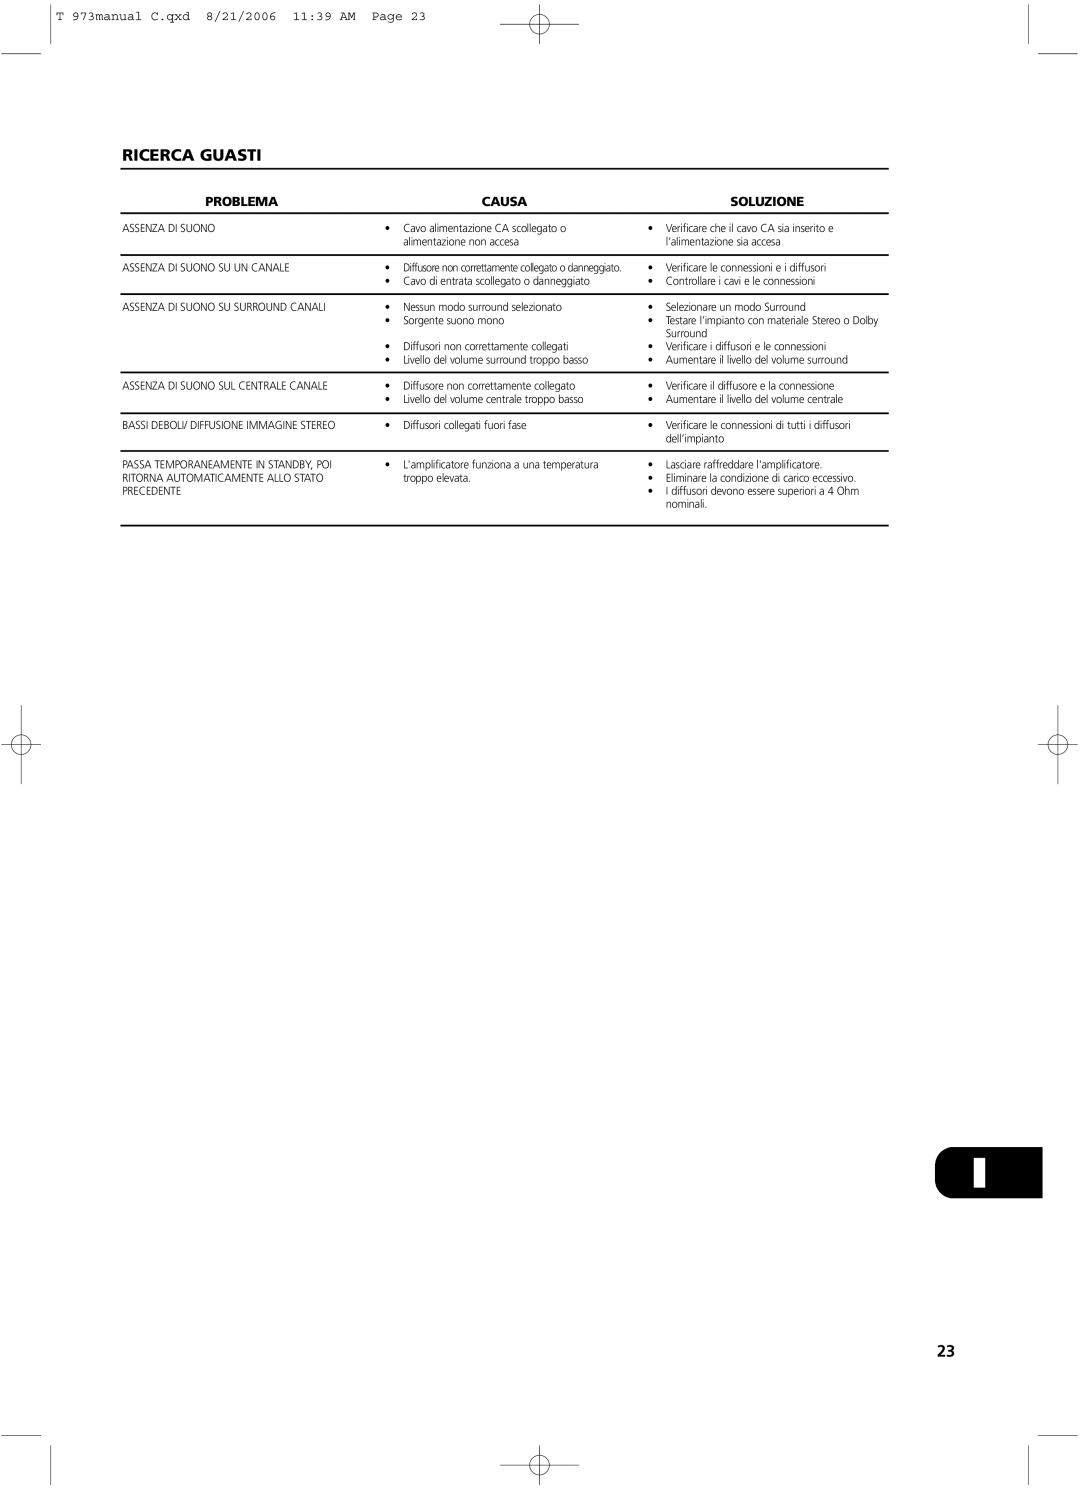 NAD owner manual Ricerca Guasti, Soluzione, T 973manual C.qxd 8/21/2006 11 39 AM Page, Problema, Causa 